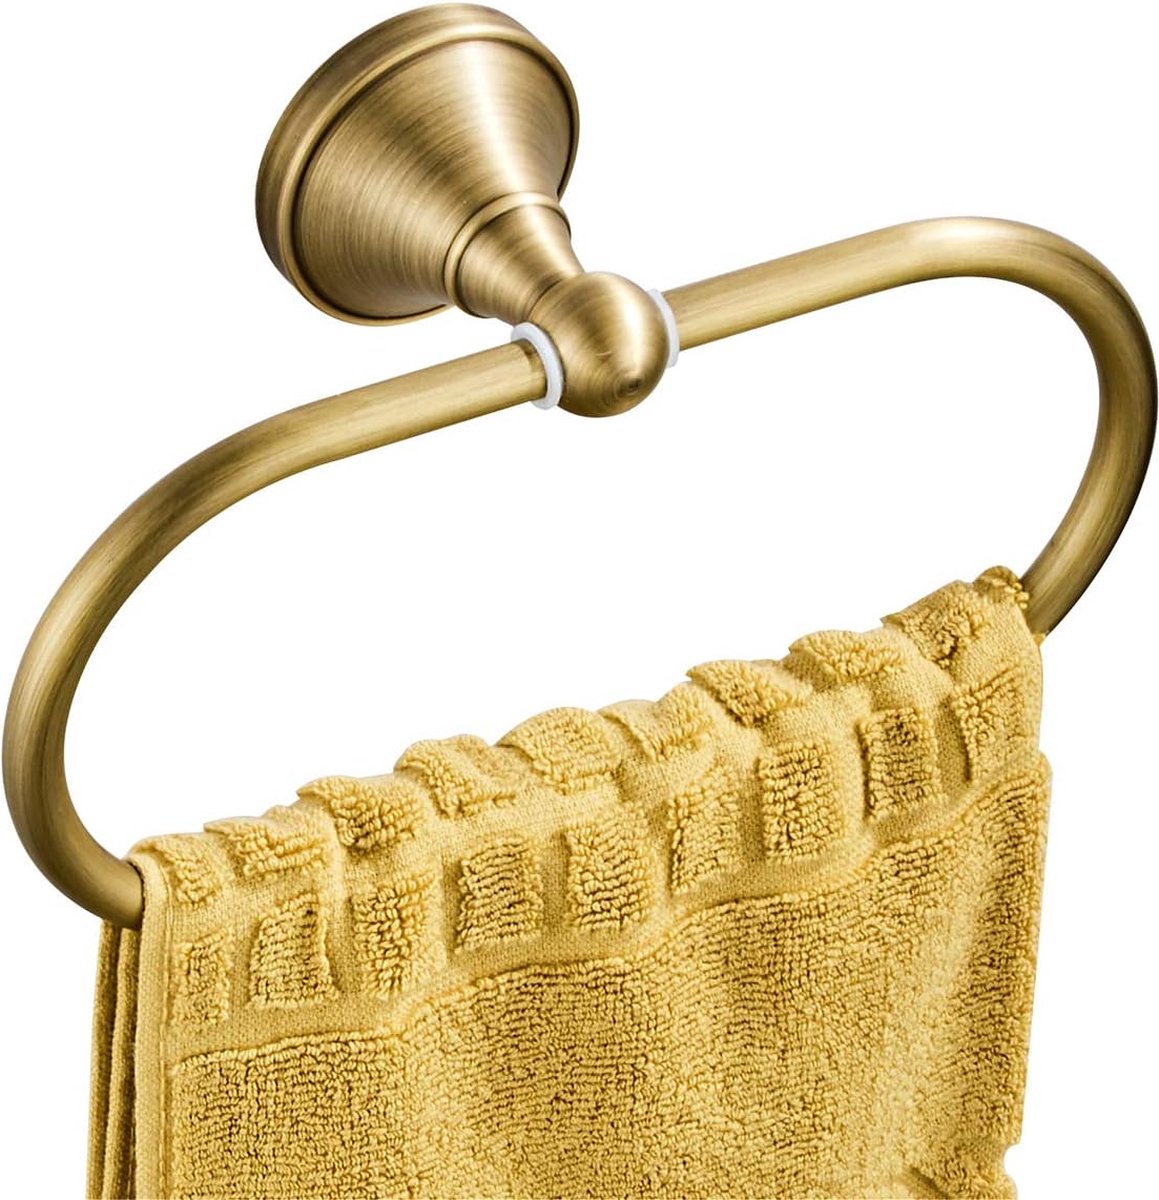 Ovale handdoekring antiek messing kleerhanger handdoekhouder voor badkamer keukenaccessoires wandmontage, brons geborsteld